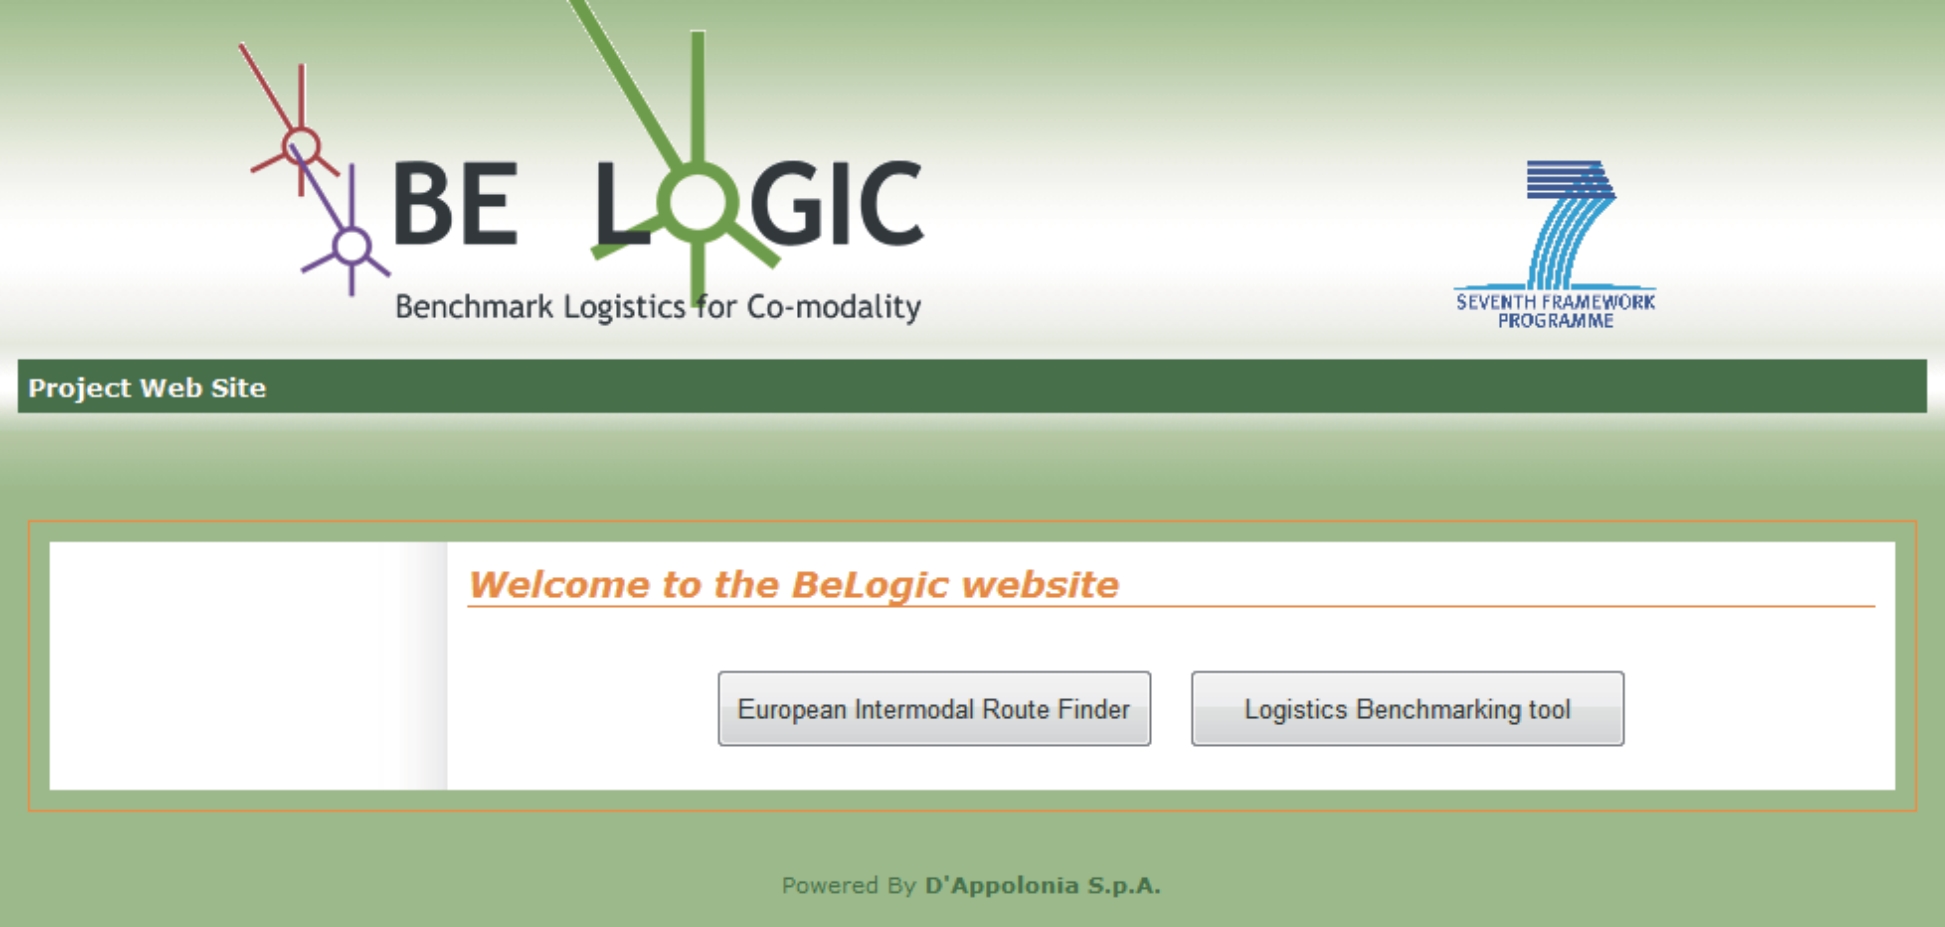 BE LOGIC - Benchmarking Logistics for co-modality